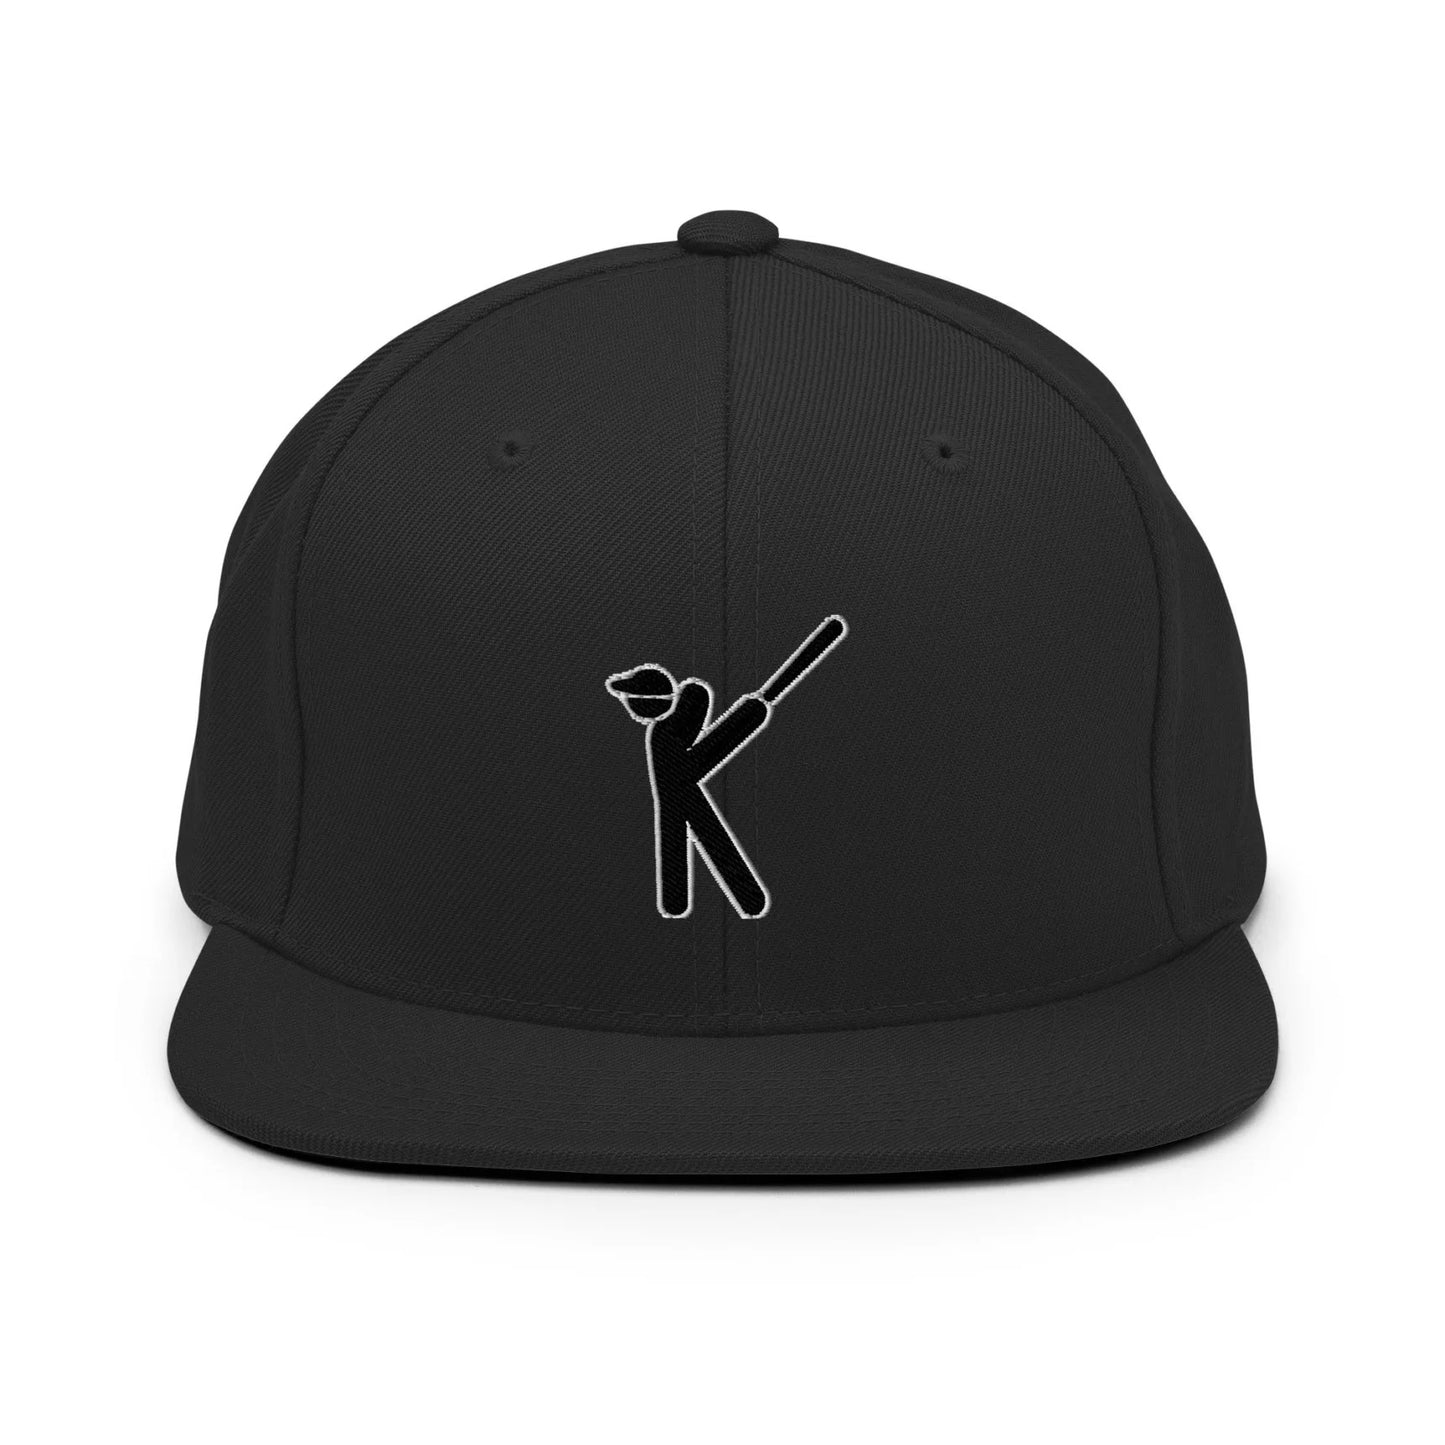 Kasabe ShowZone hat in black